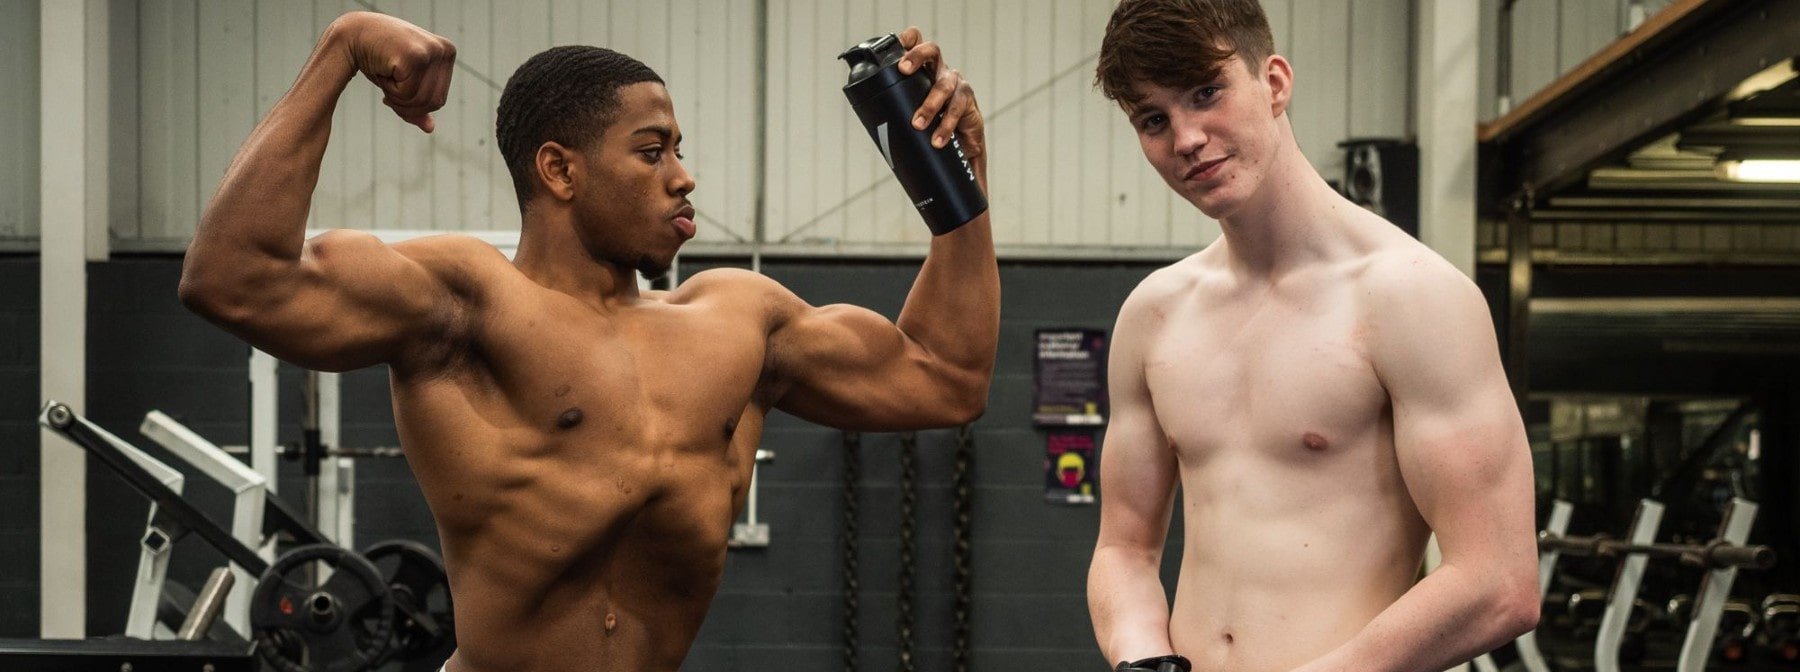 Joe Fazer & Nathaniel Massiah Go Head To Head To Decide Who’s King Of The Gym